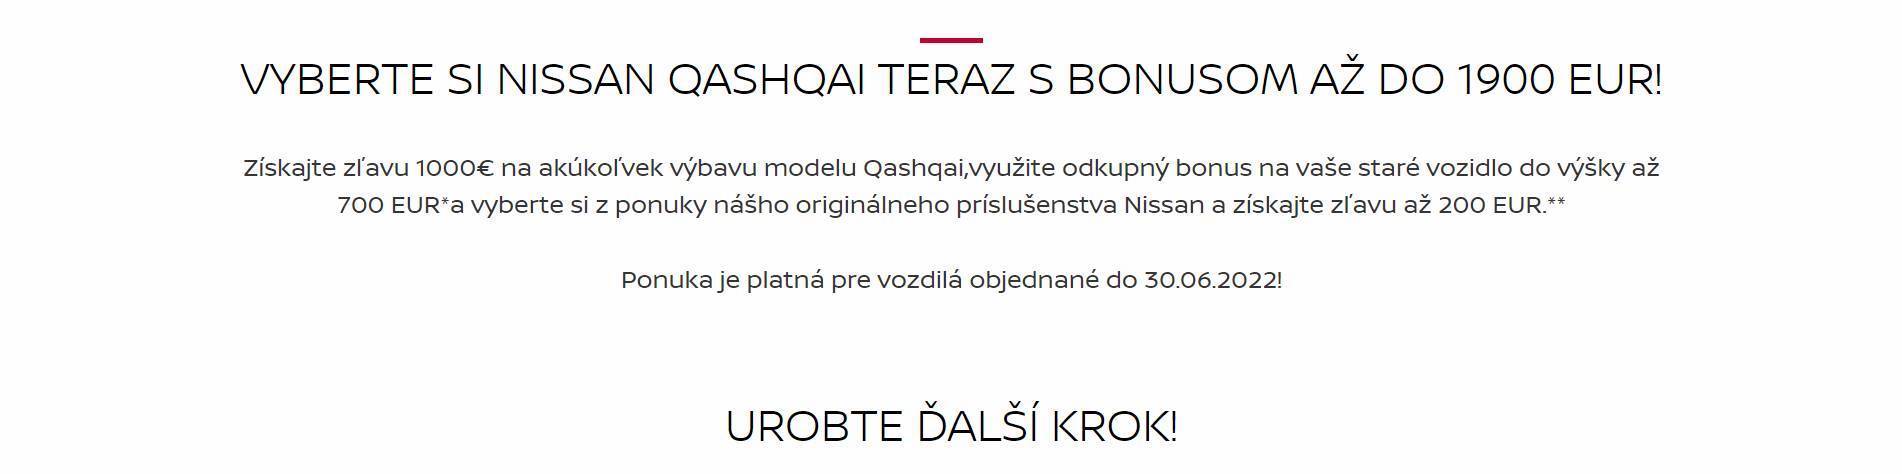 Vyberte si Nissan Qashqai teraz s BONUSOM až do 1900 EUR!